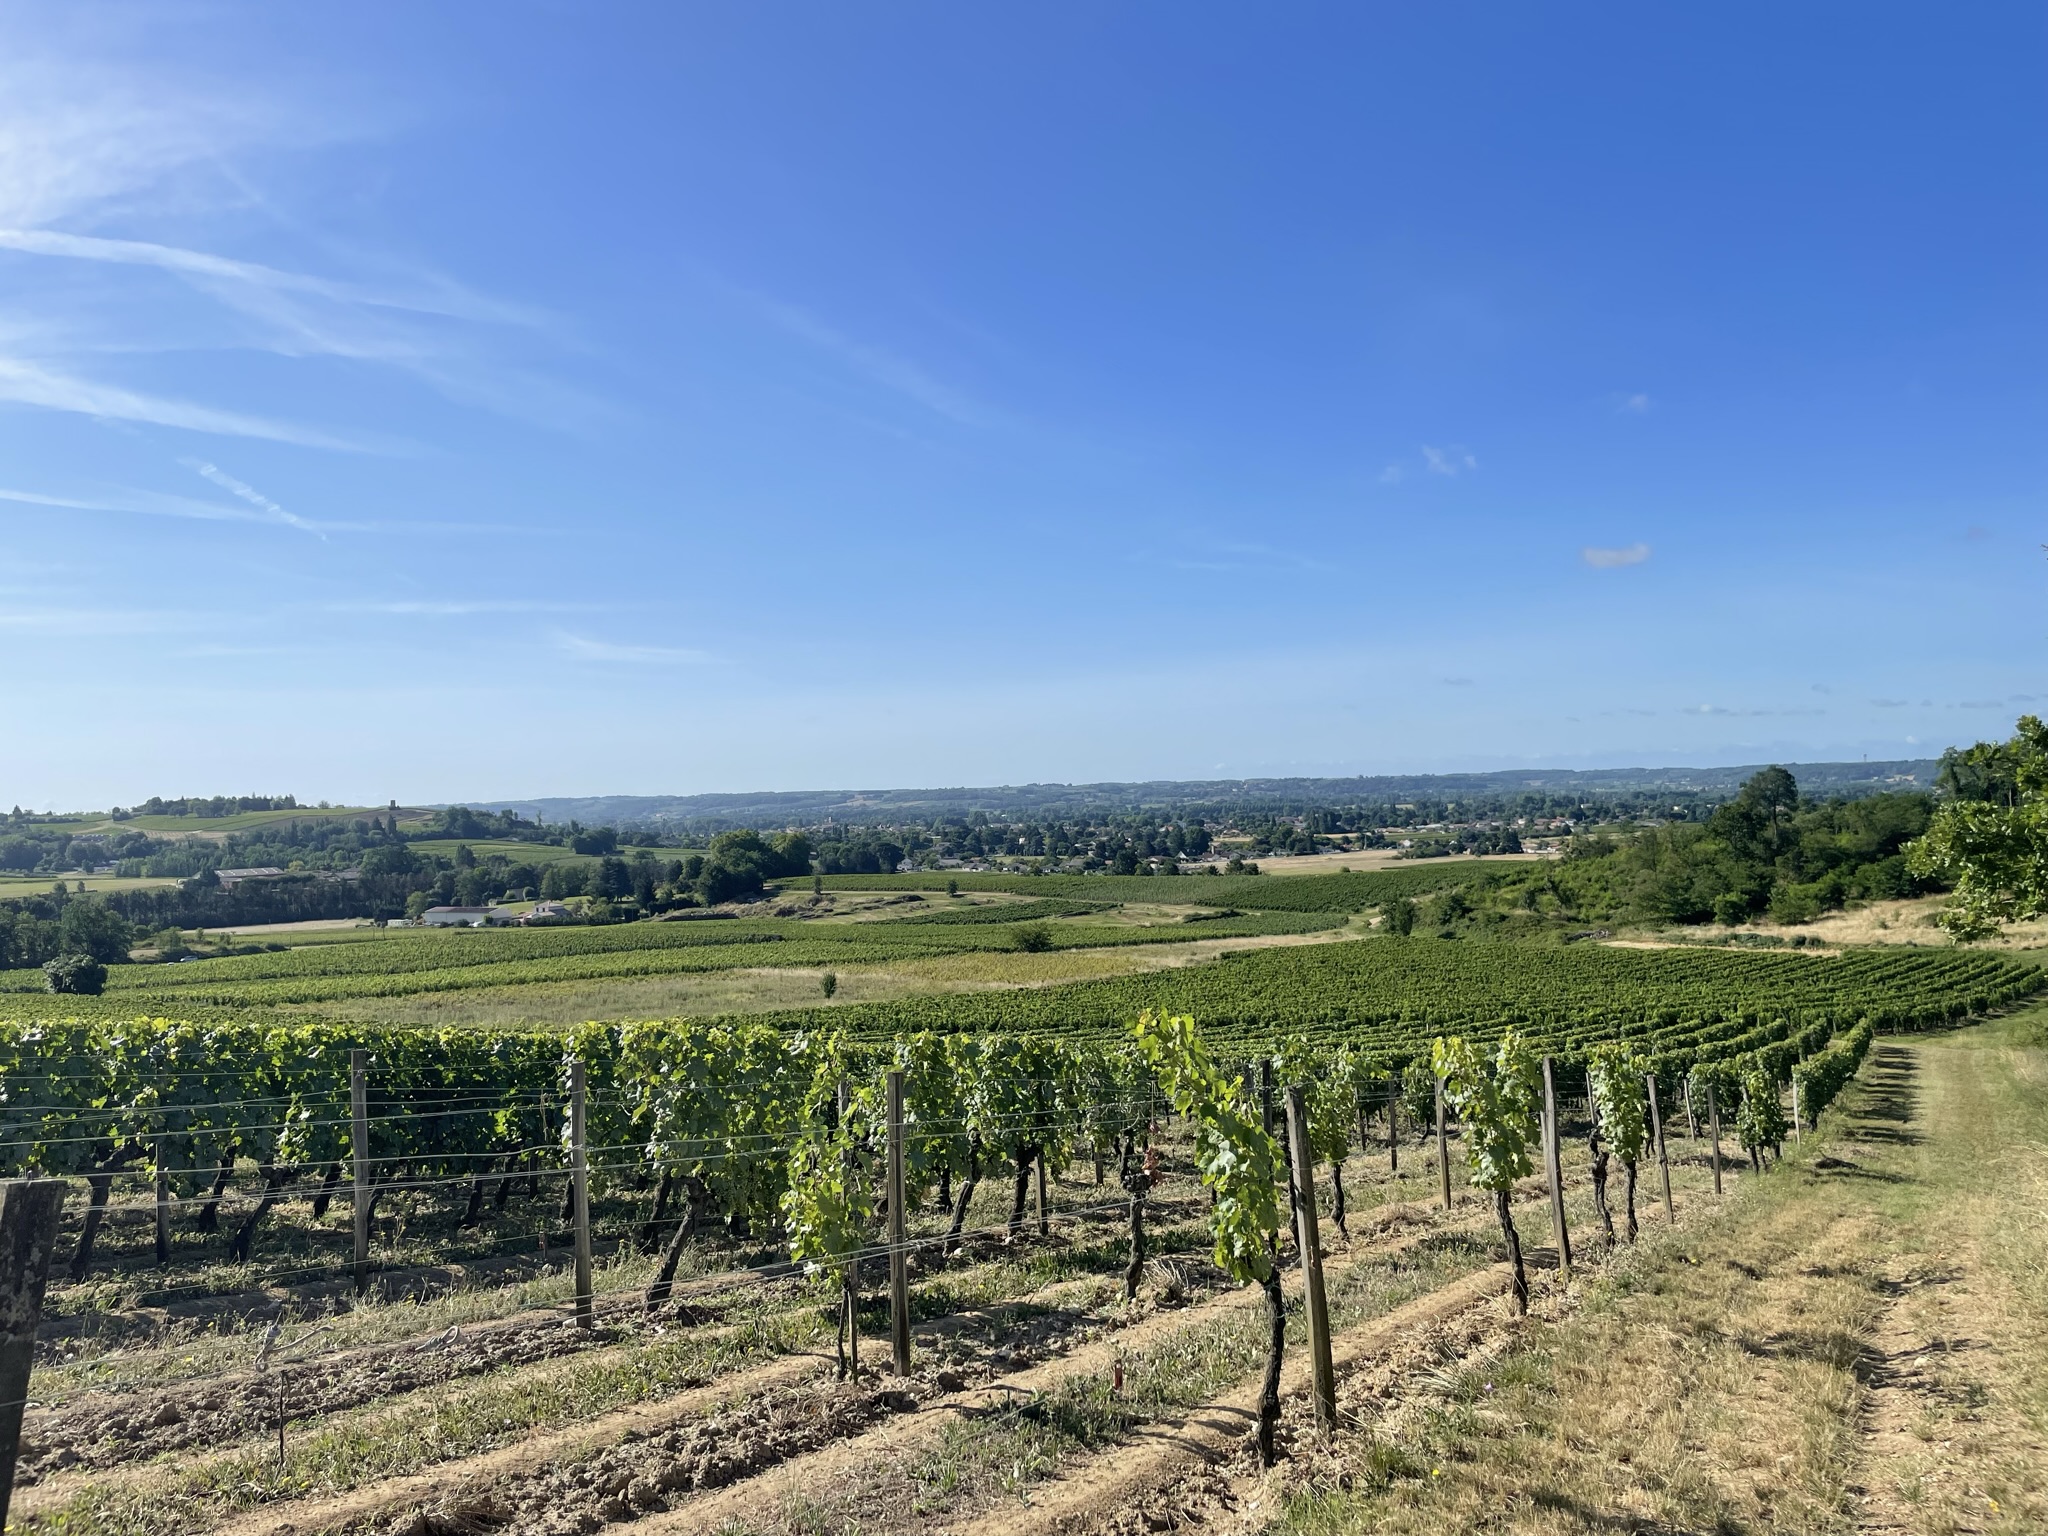 Loop of the slopes of the Castillonnais vineyard